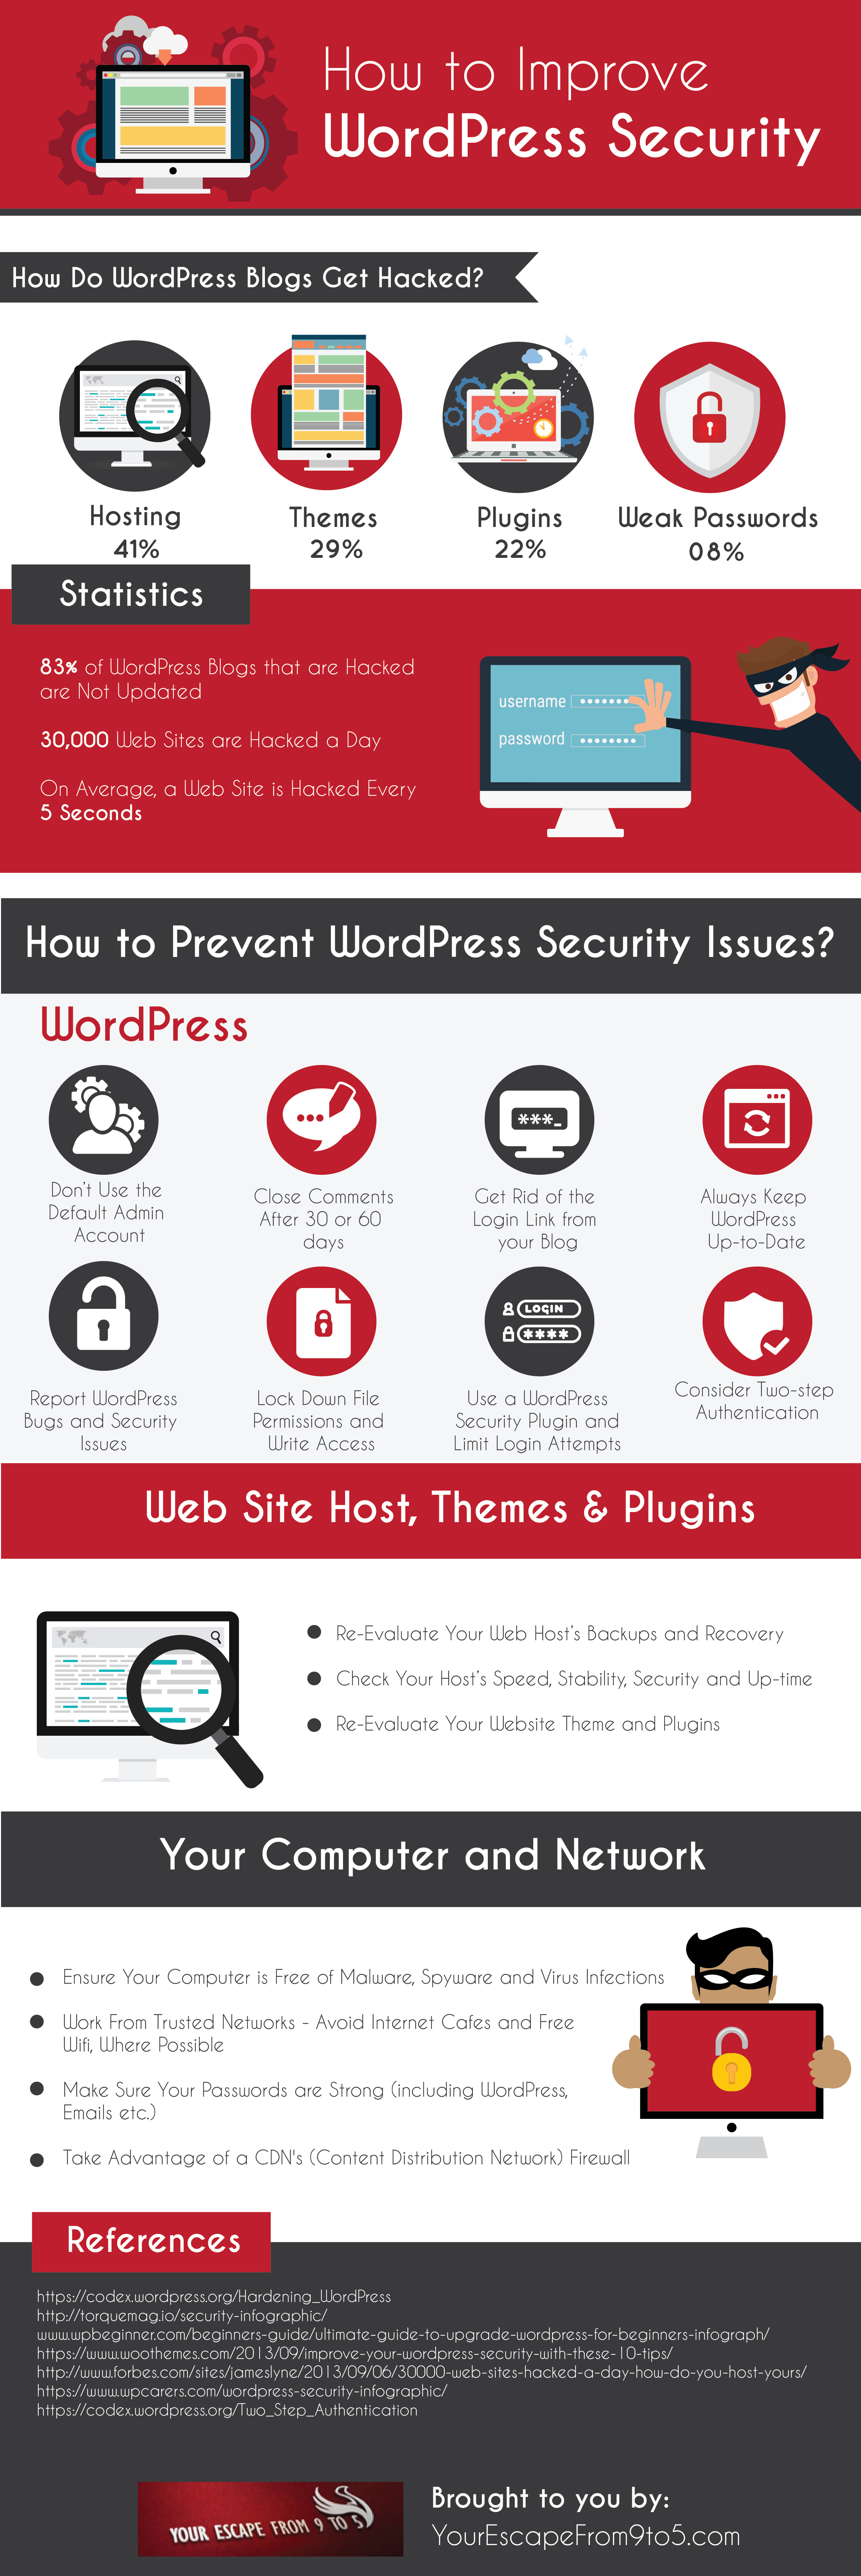 How-to-Improve-WordPress-Security-Infographic_jpg